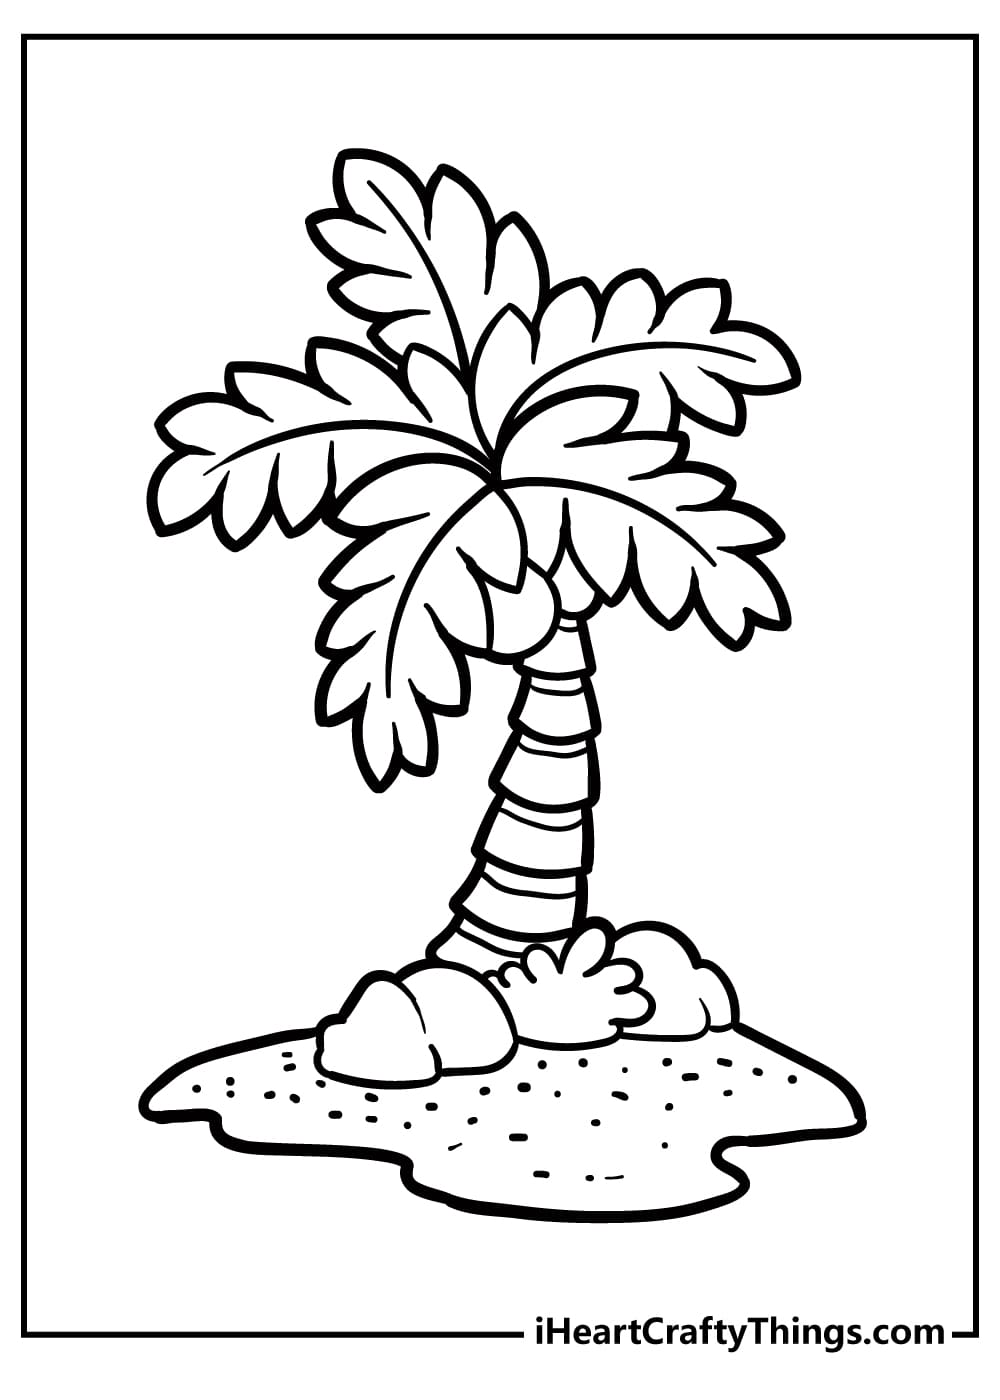 Palm Tree Image Kids